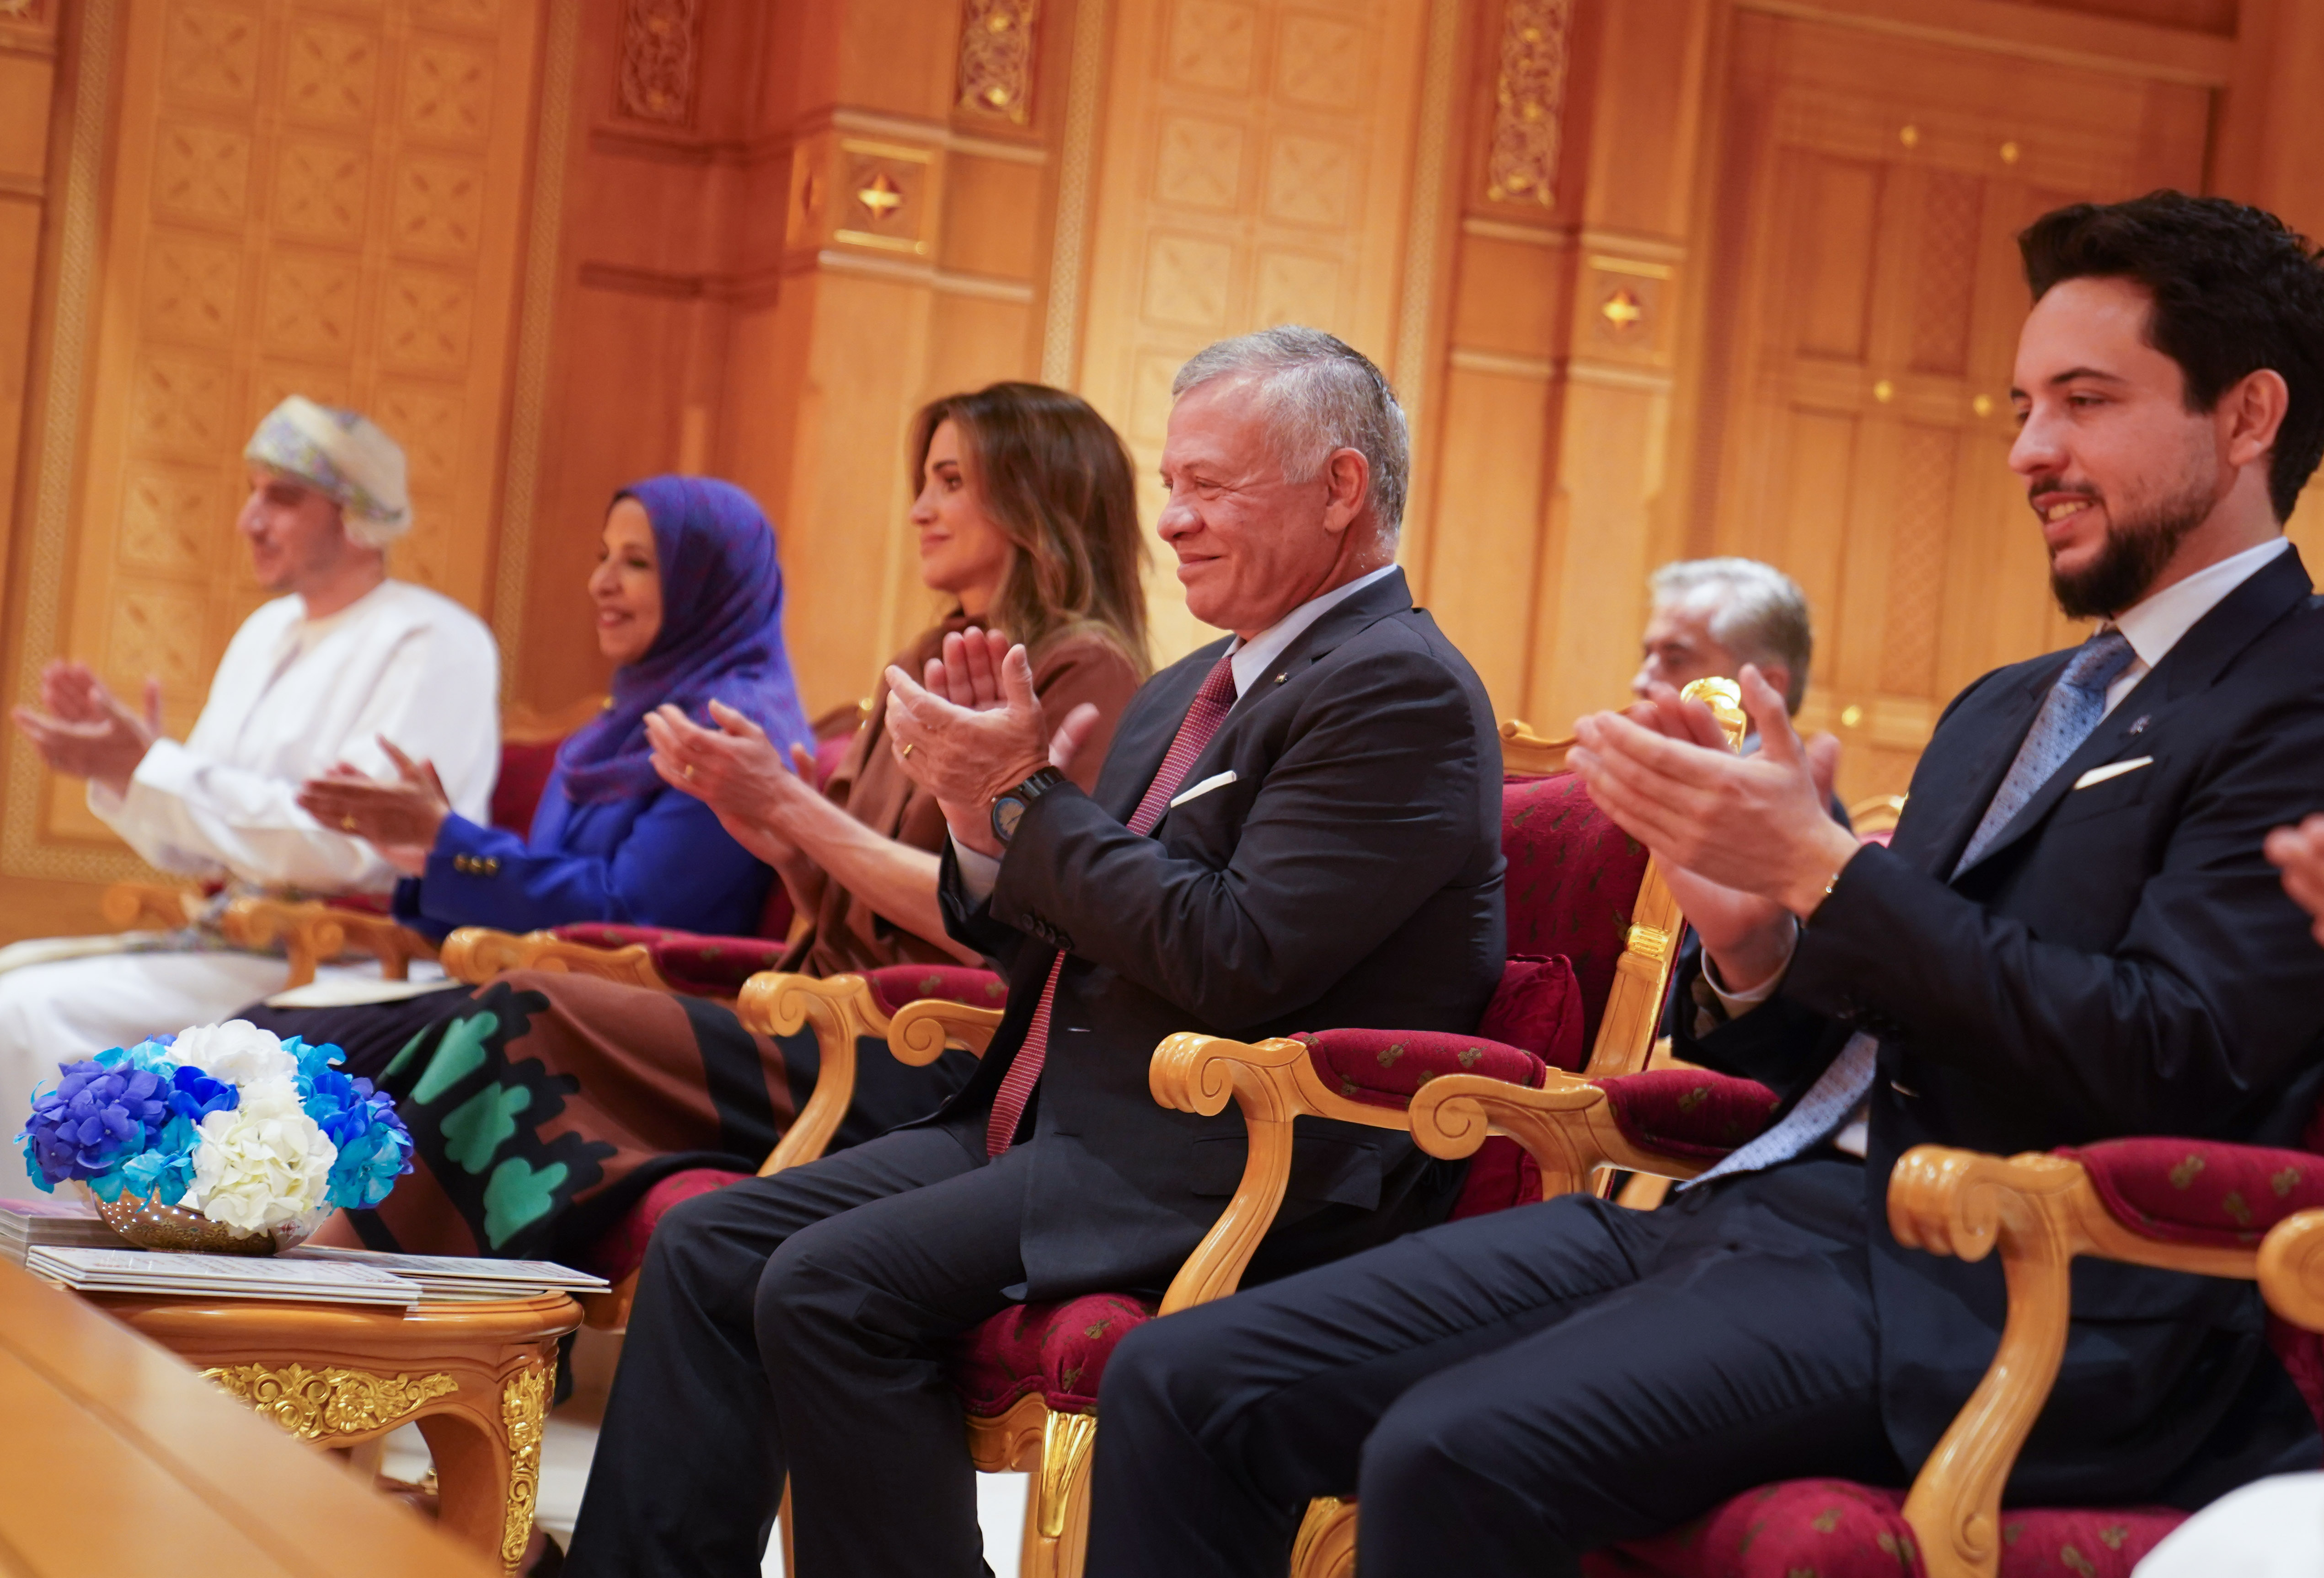 Jordan Royal Family concluded Oman visit